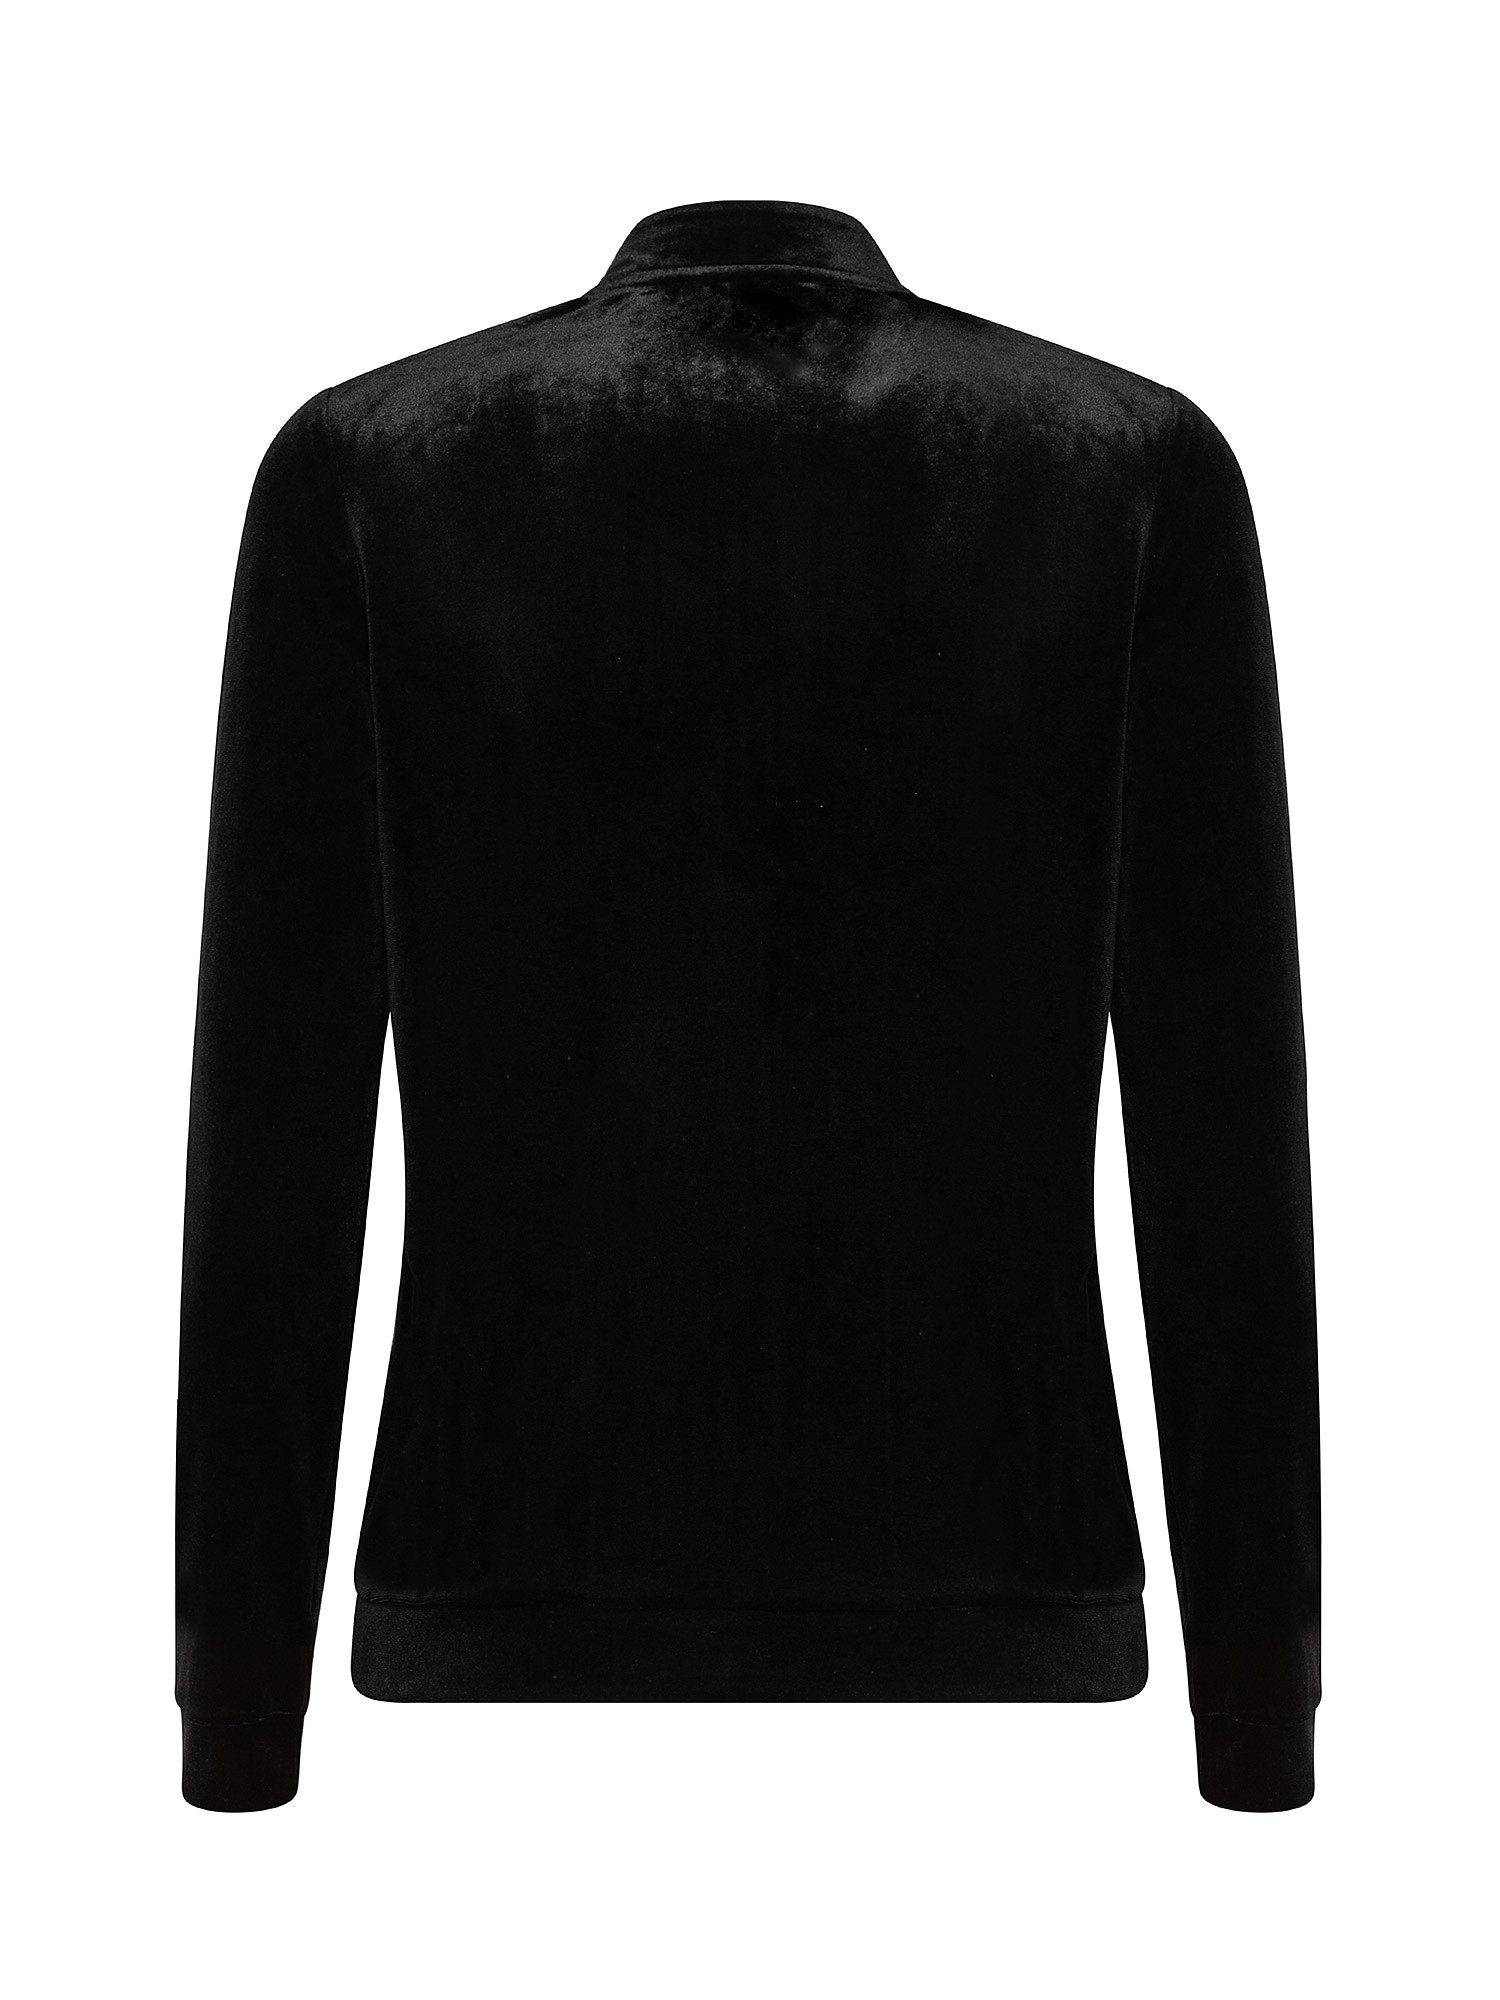 Chenille jacket, Black, large image number 1